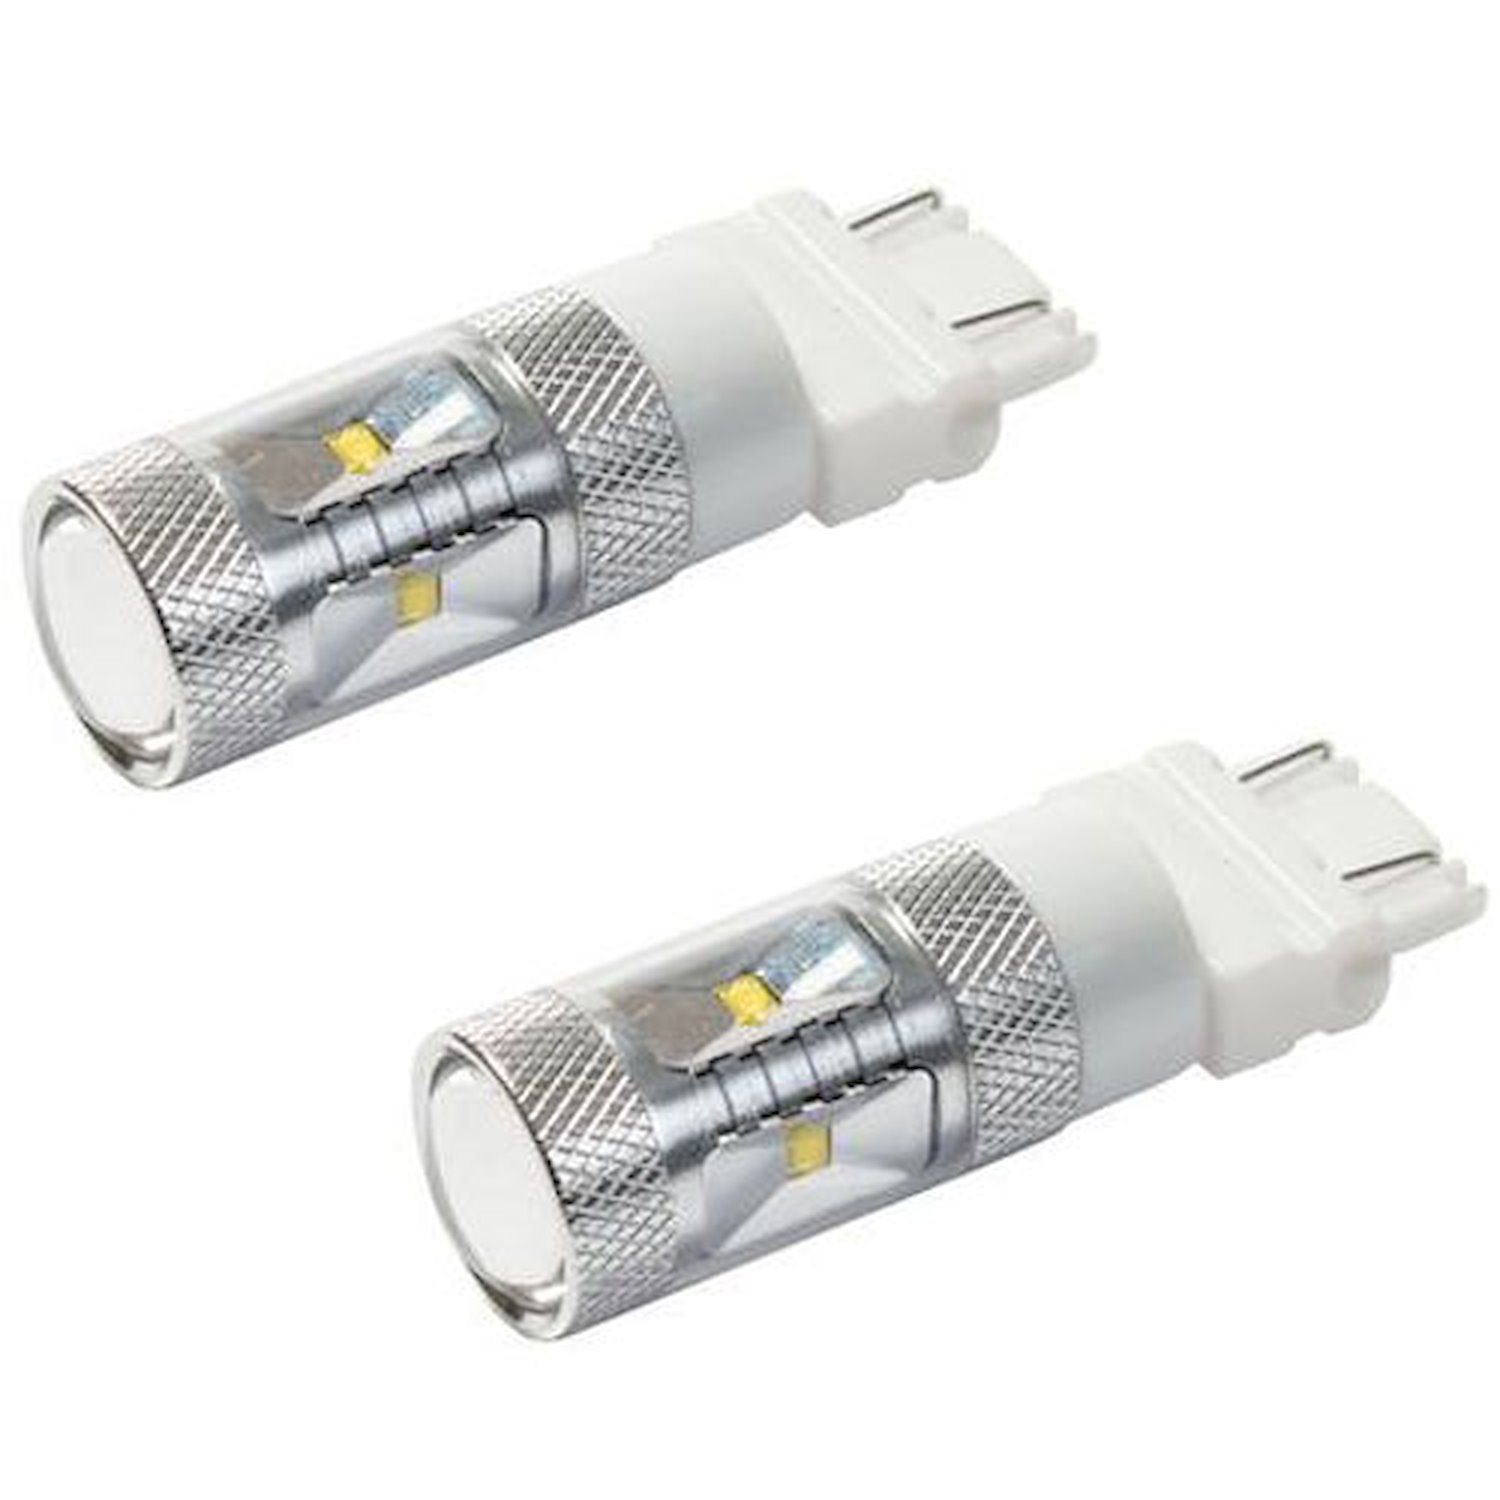 Plasma LED Bulbs 7443 Bulb Replacements